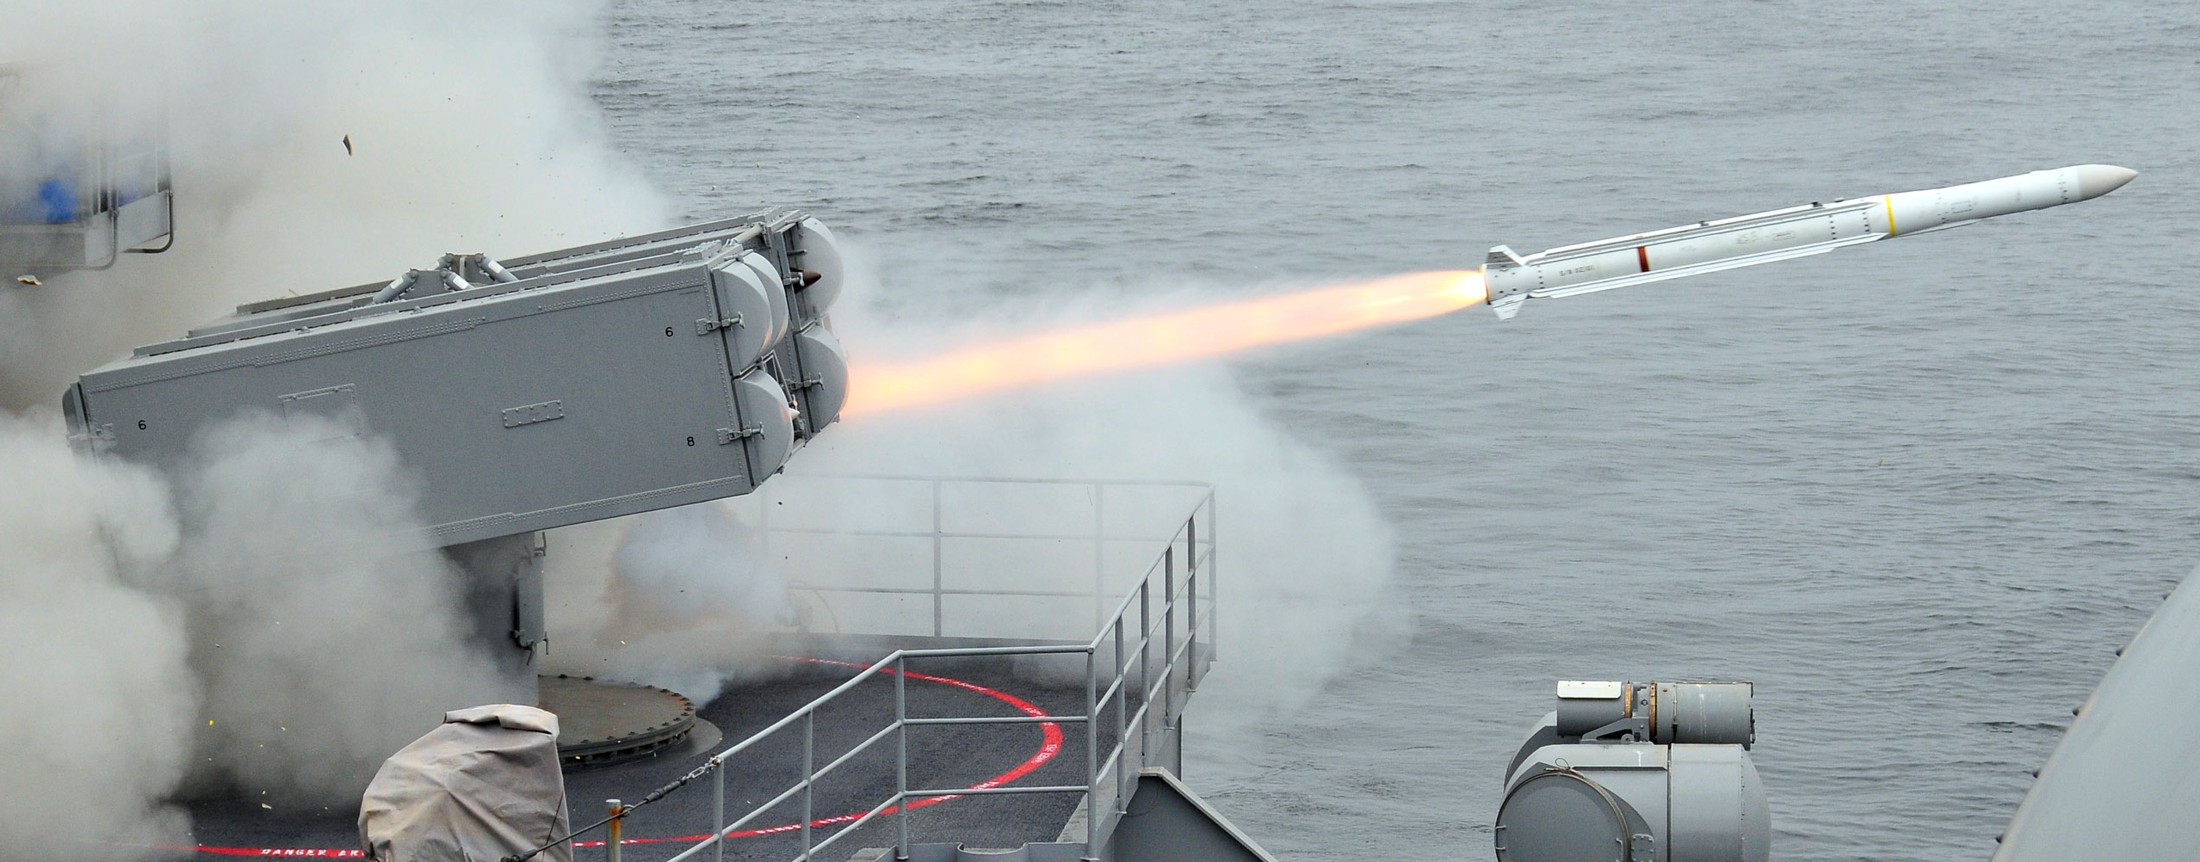 mk-29 launcher rim-162 evolved sea sparrow missile essm uss carl vinson cvn-70